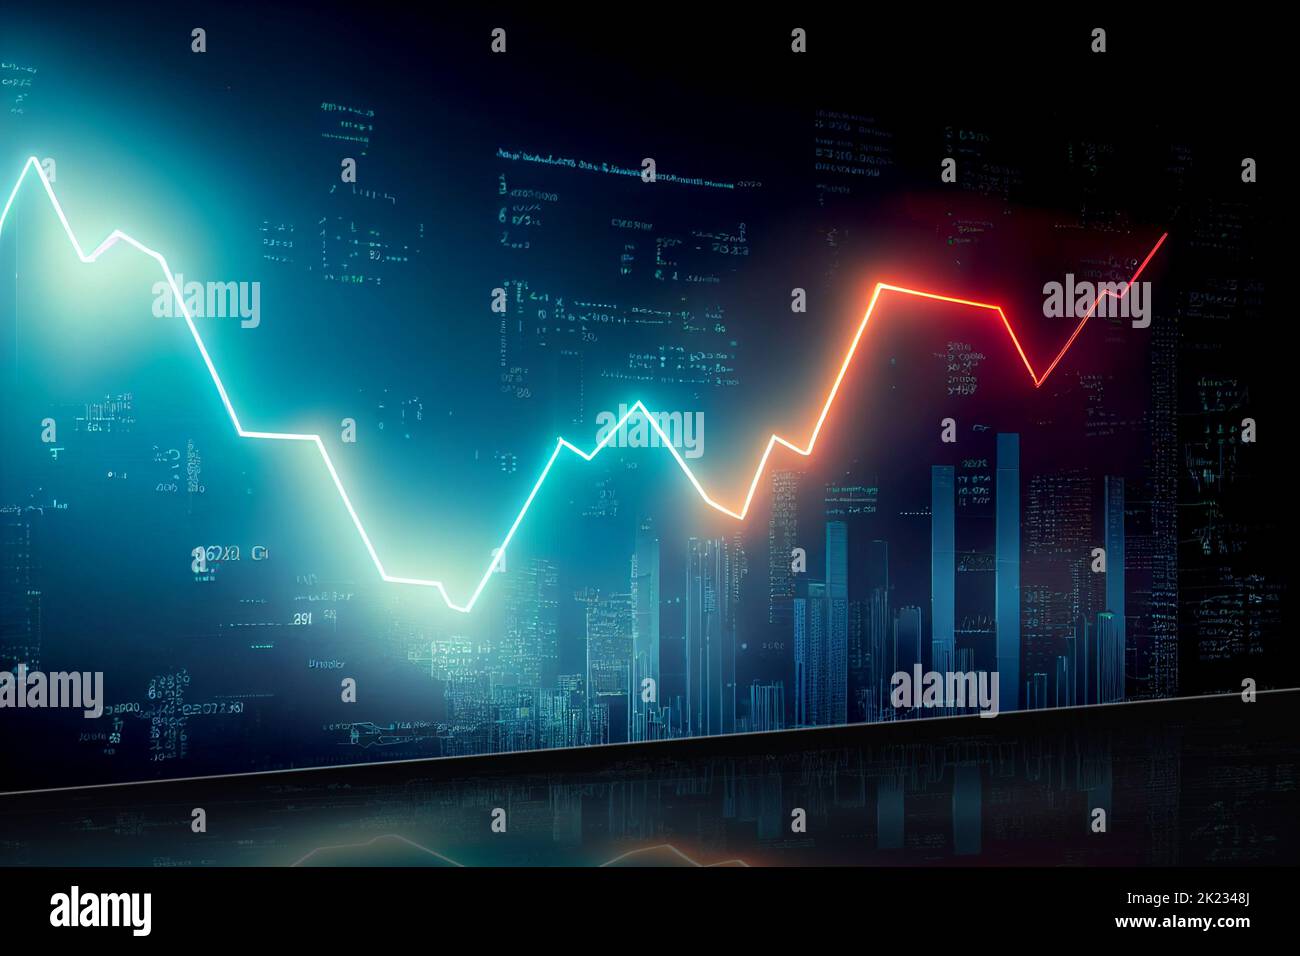 Abstract digital art of Stock market investment progress chart - DGi Stock Photo